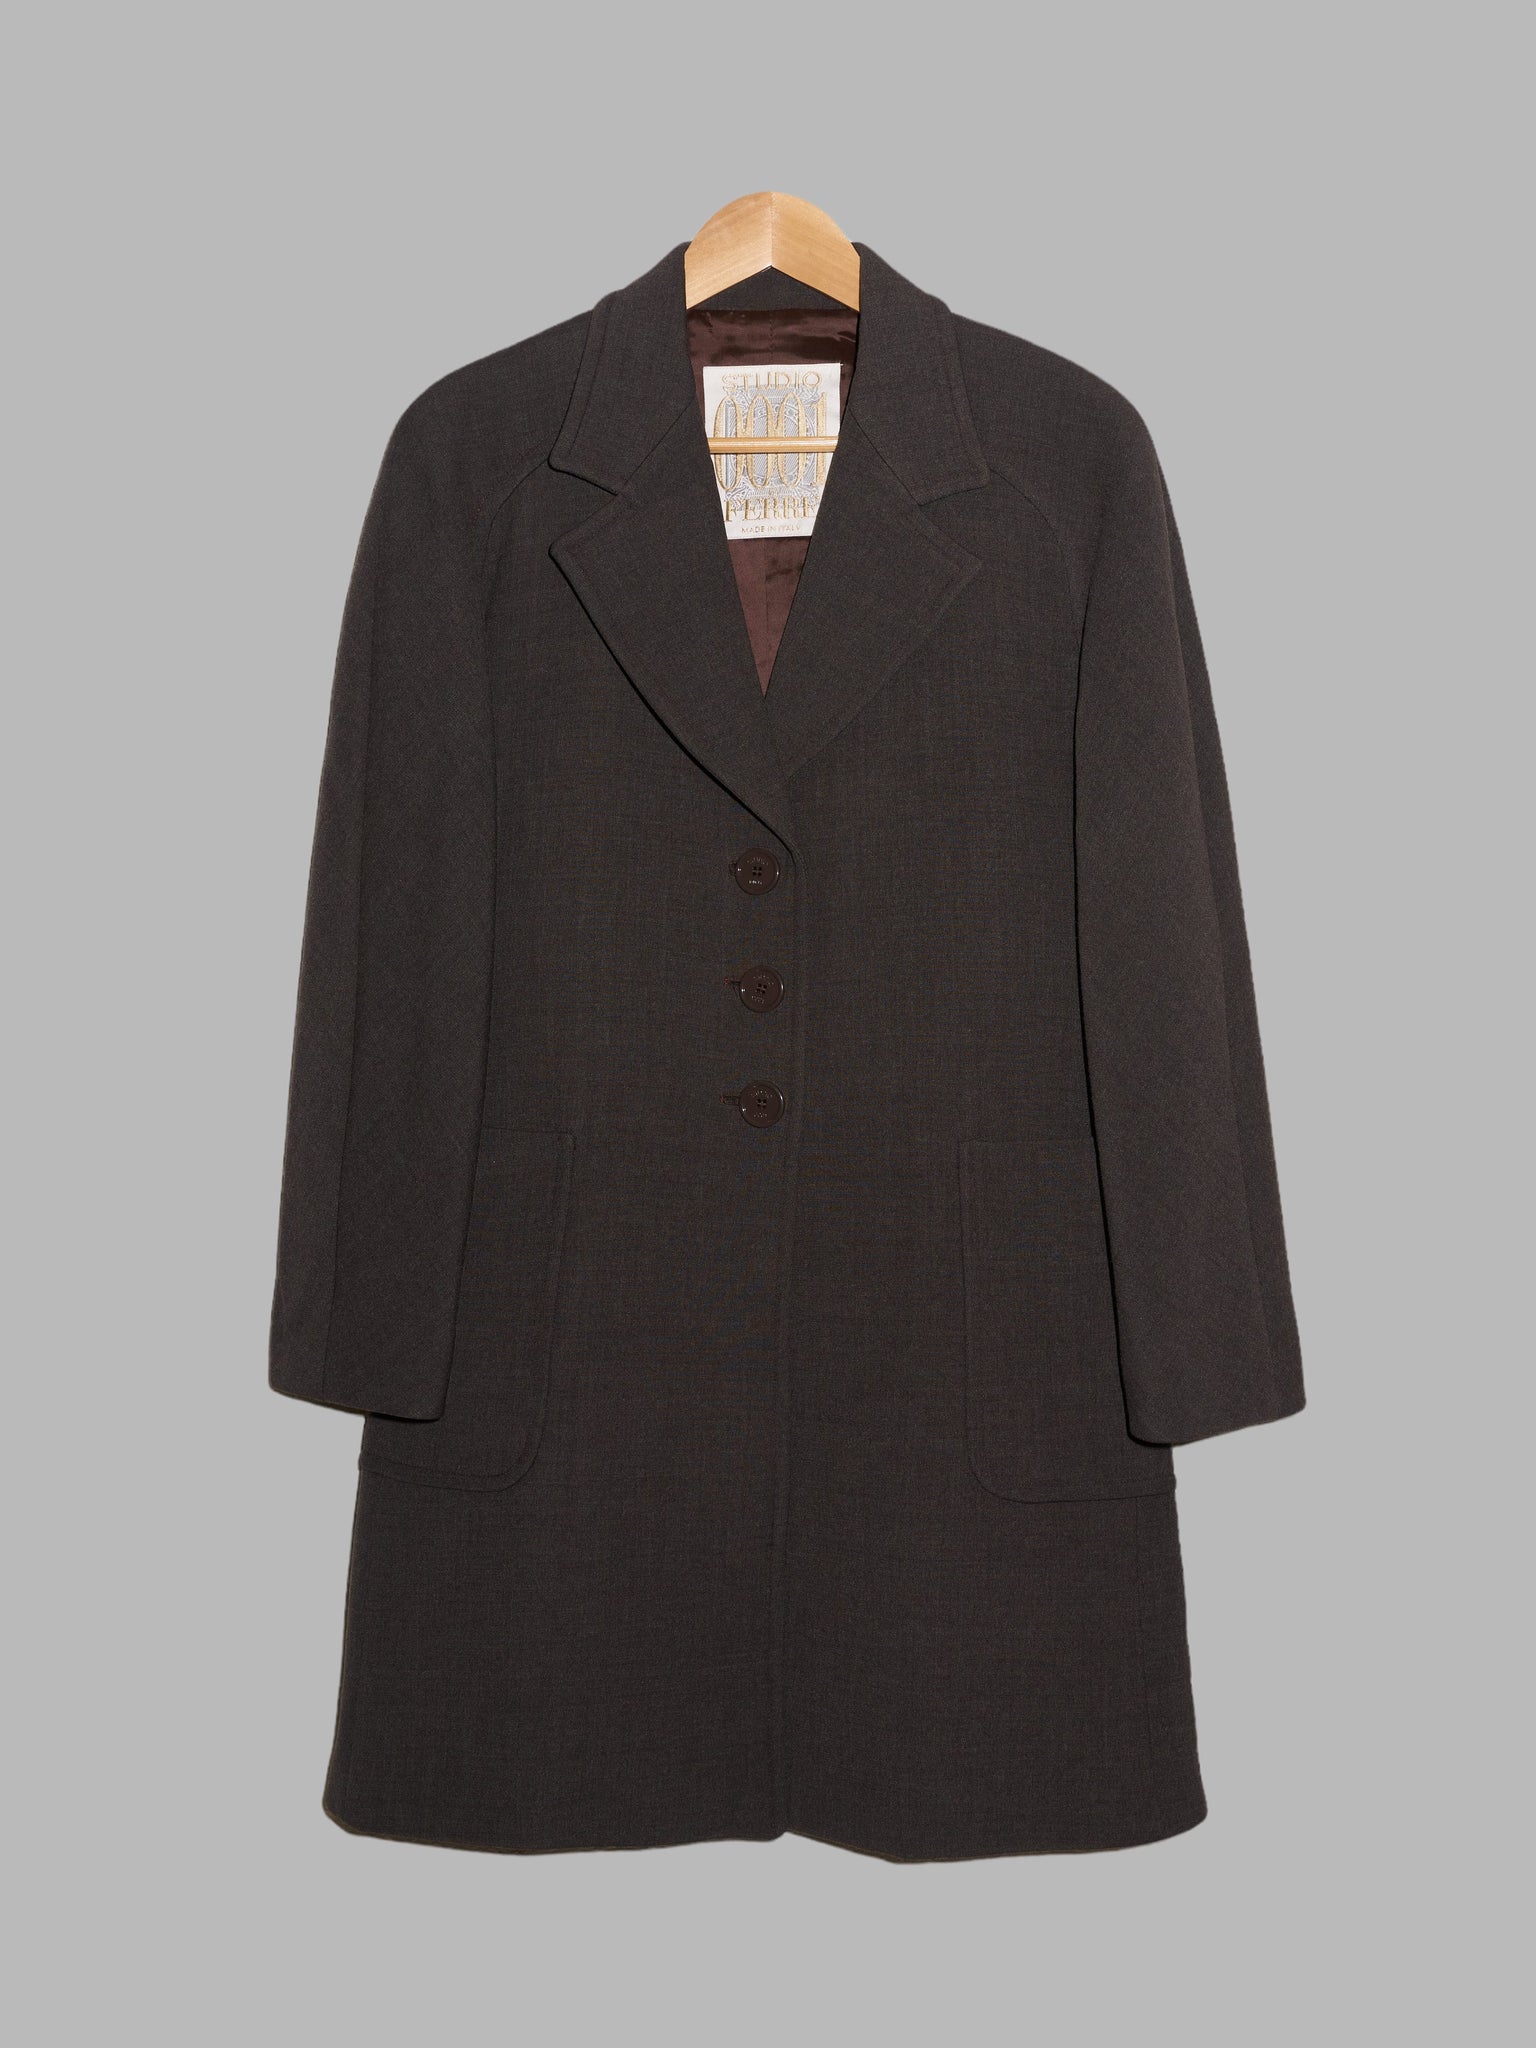 Studio 0001 Gianfranco Ferre 1980s brown wool three button coat - size 8